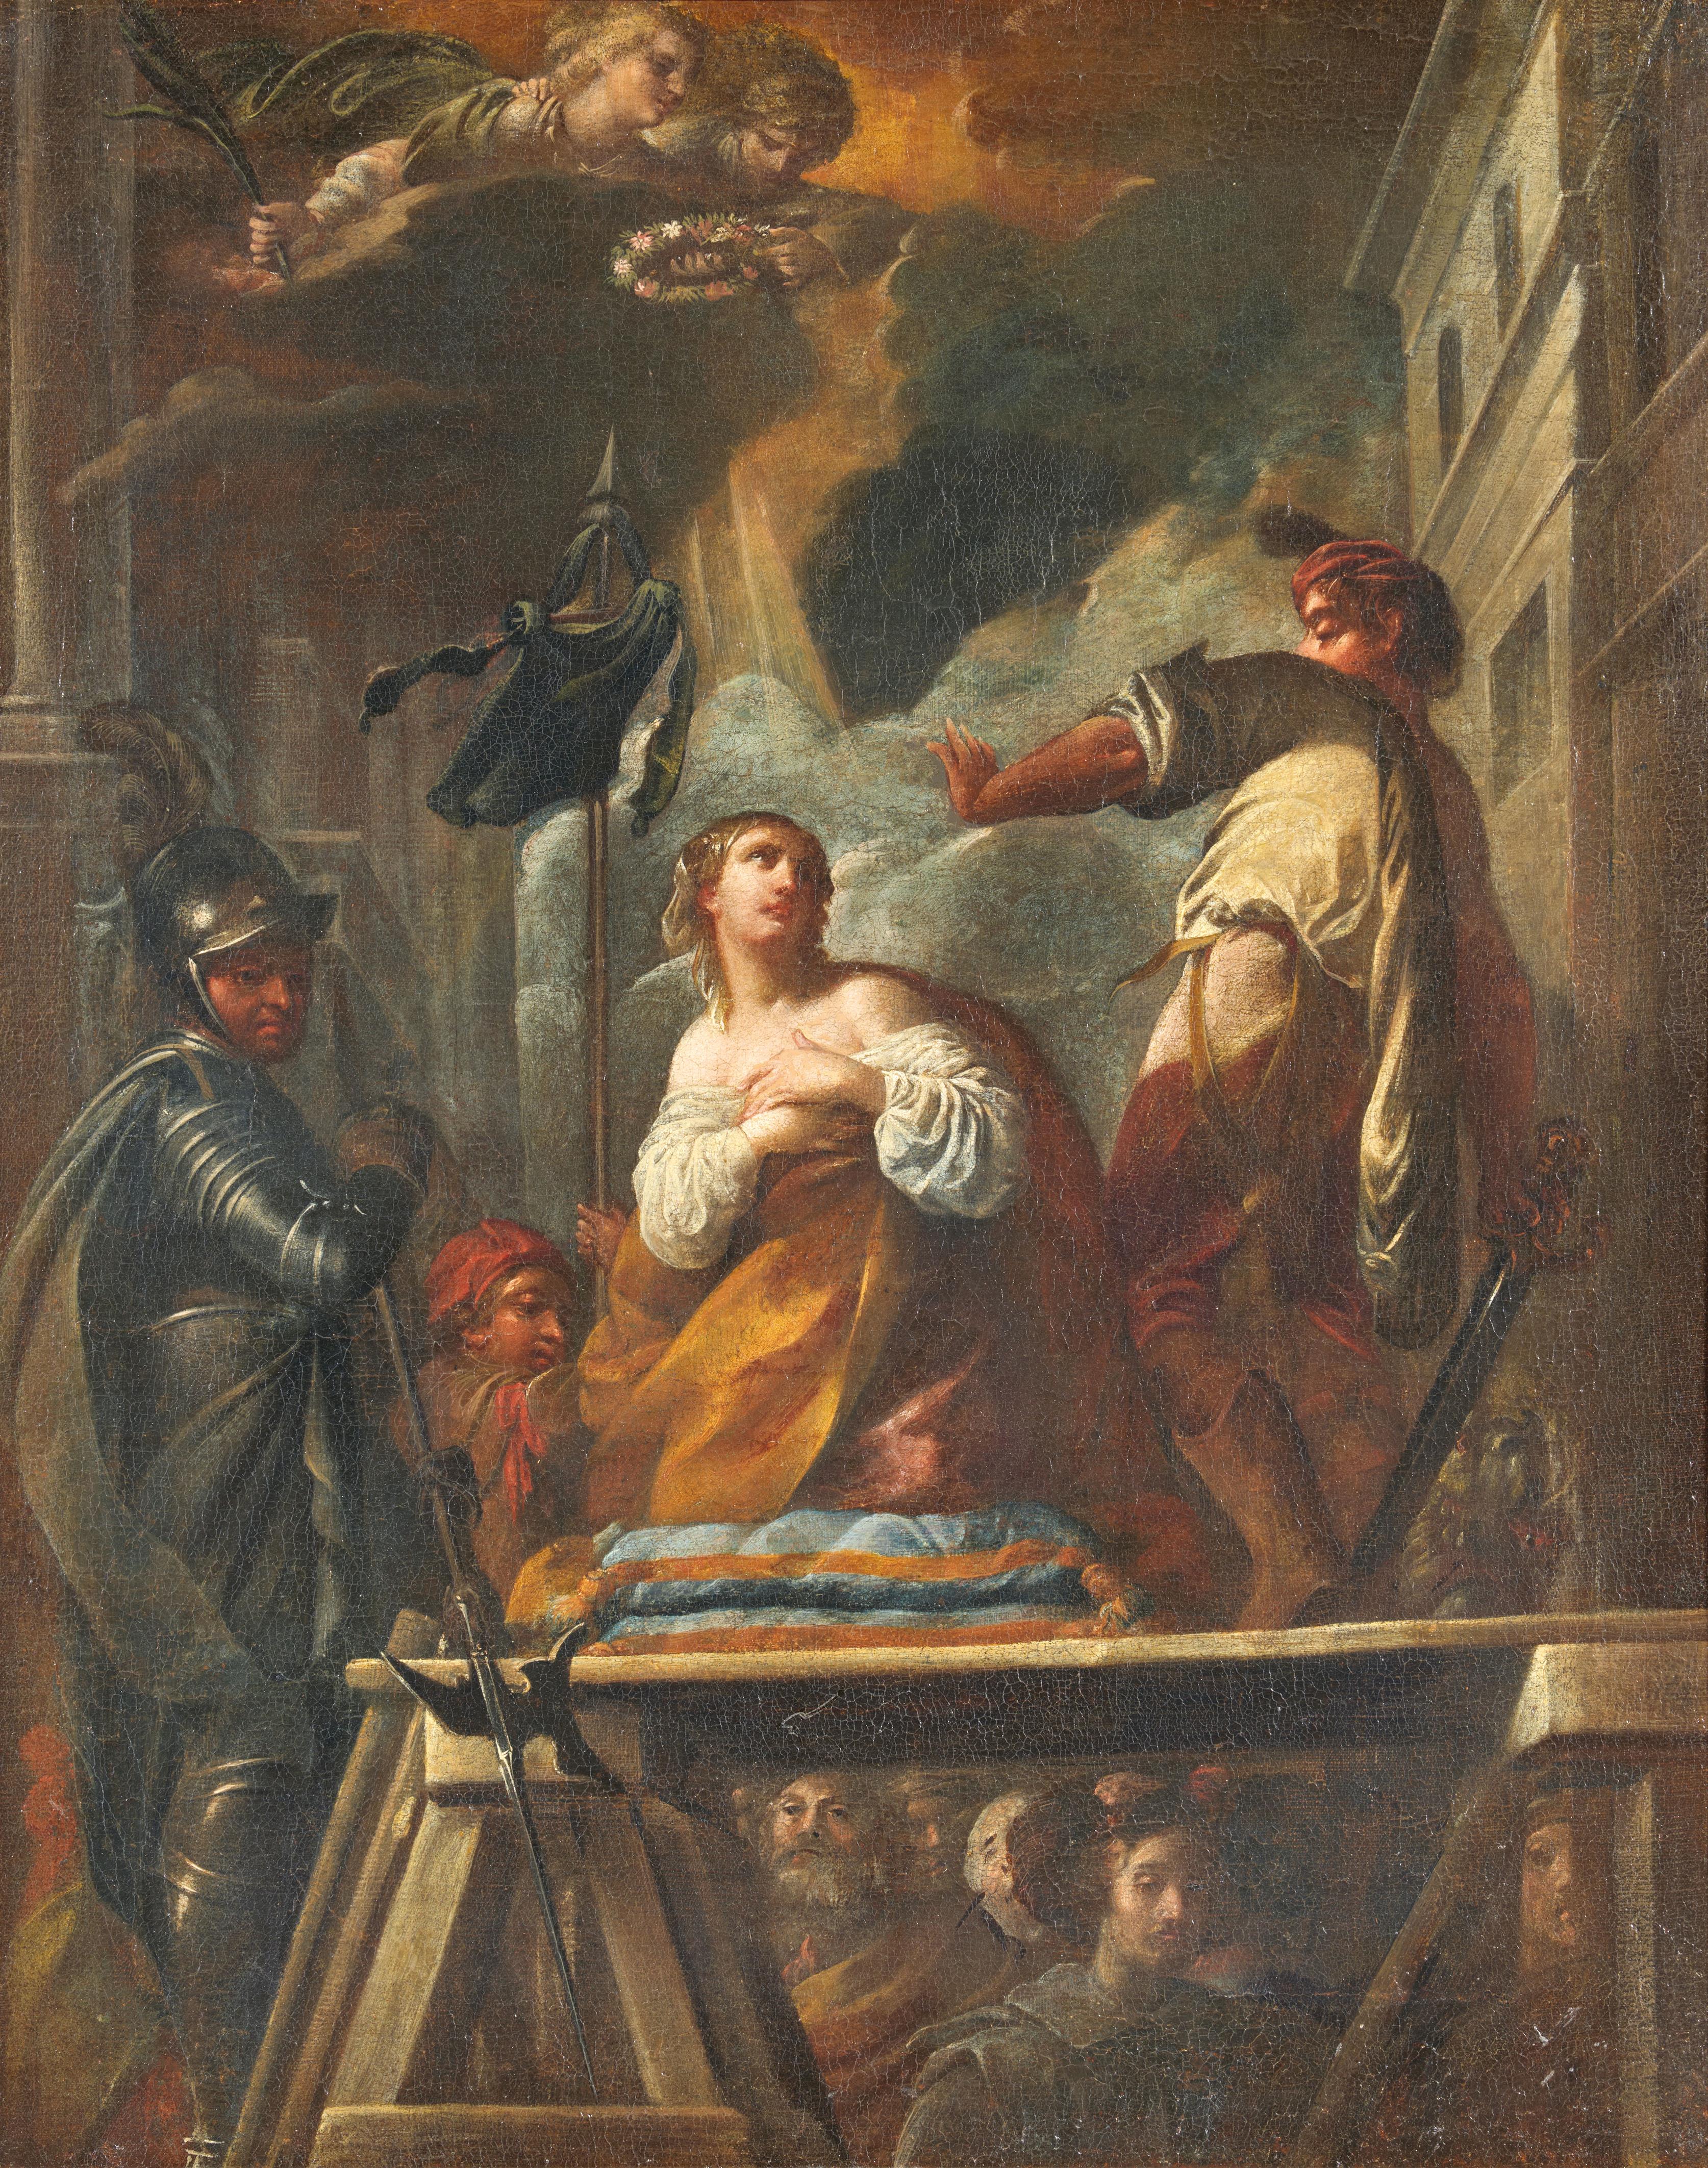 Venetian School 17th century - The Martyrdom of St. Cecilia - image-2